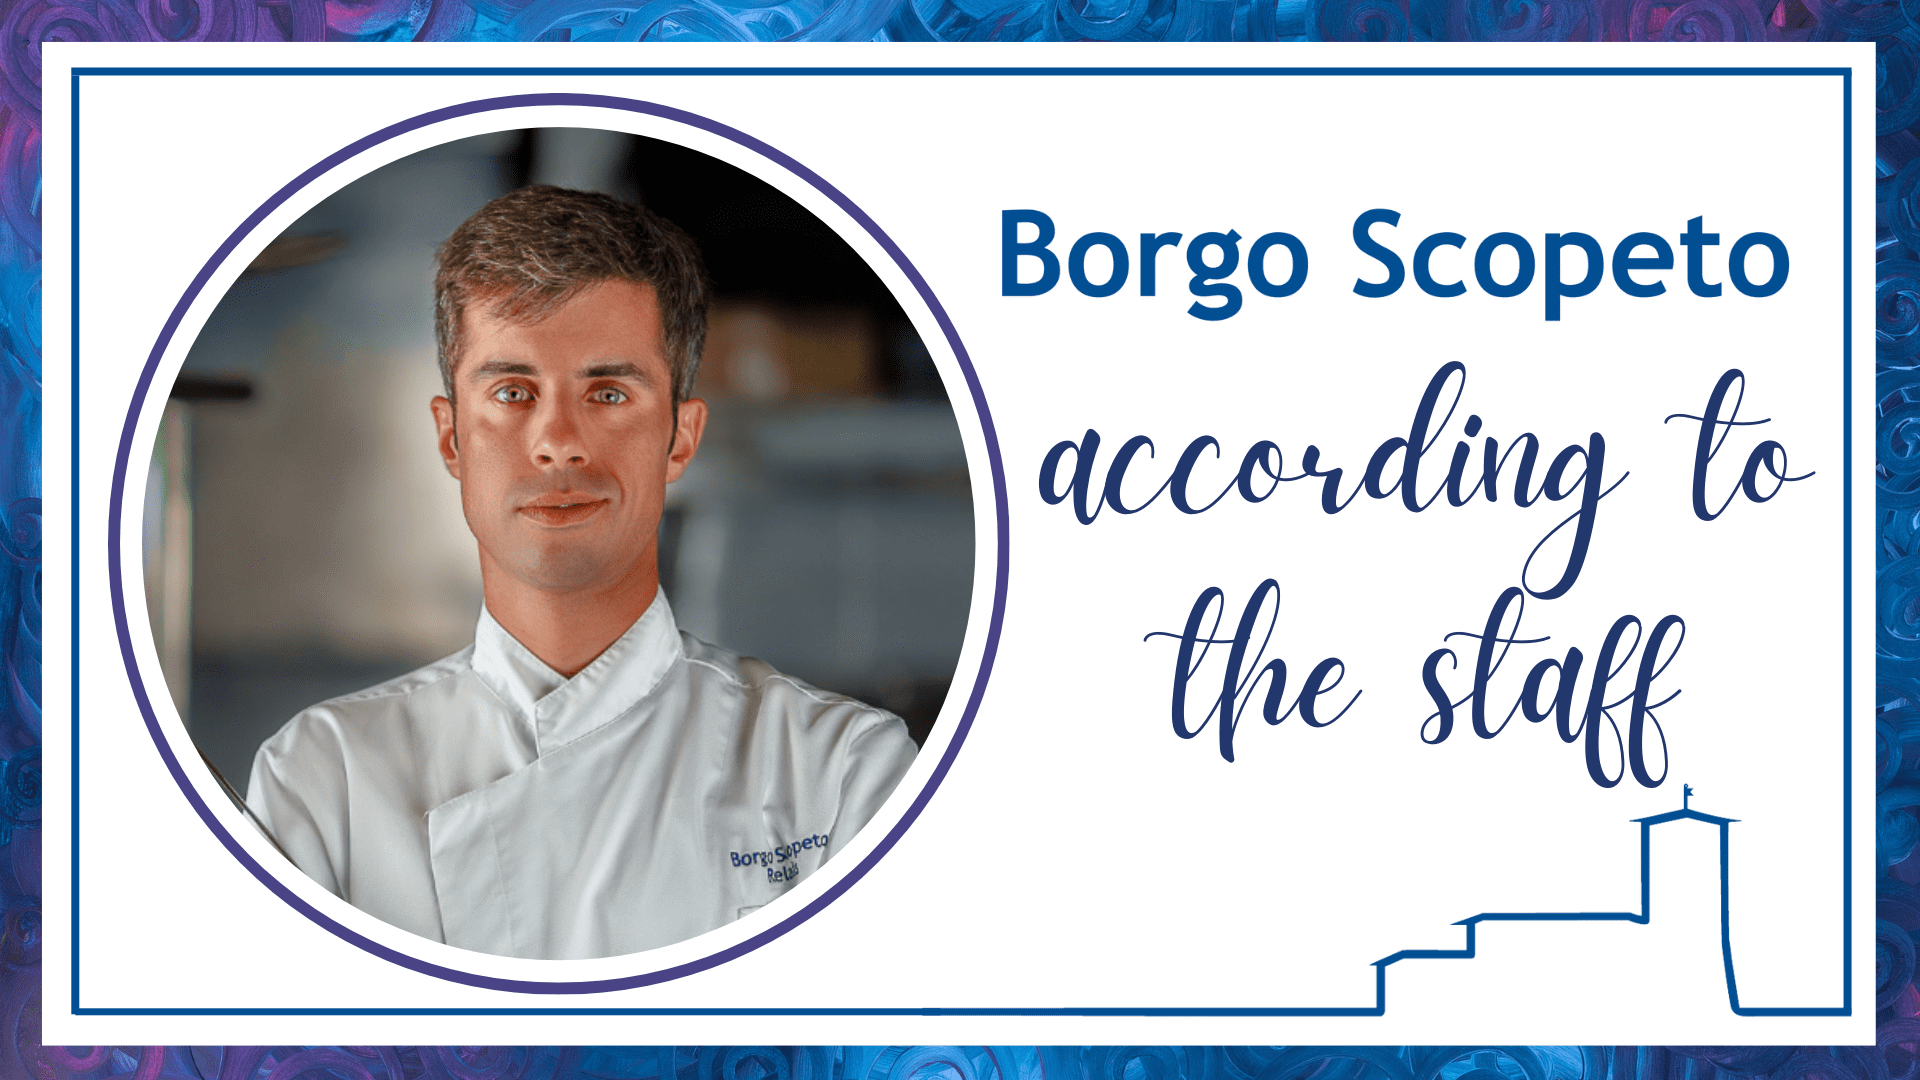 Borgo Scopeto according to the staff - Pietro 2